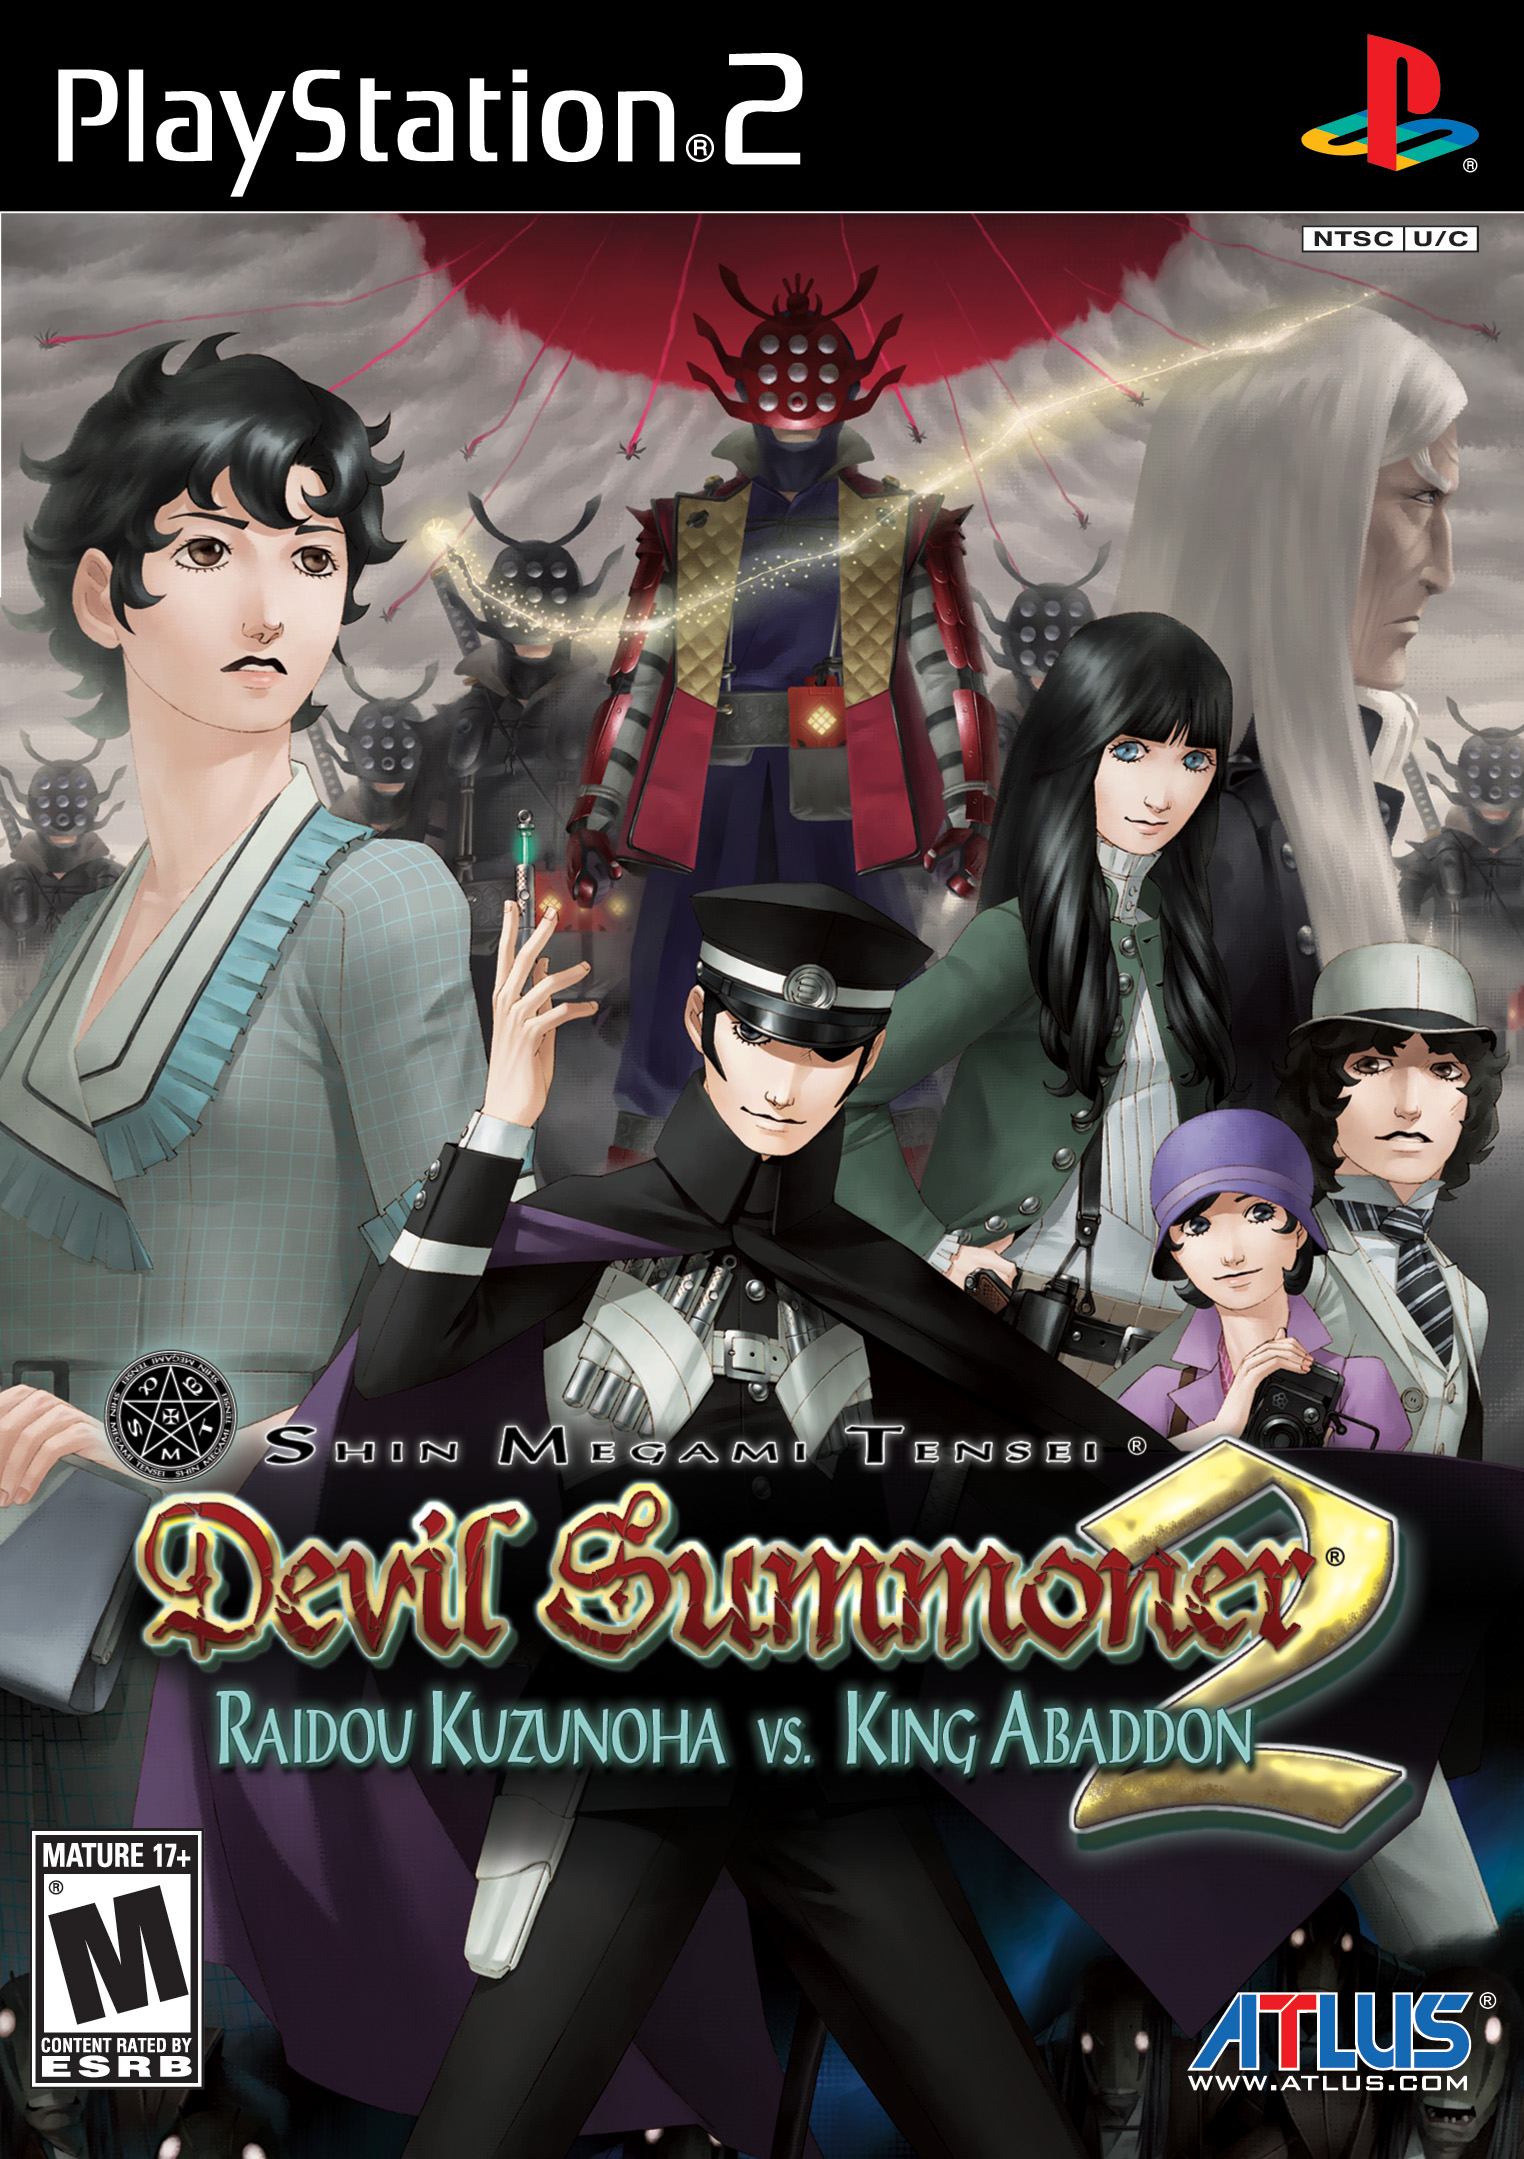 Shin Megami Tensei: Devil Summoner 2 Part #16 - Kasumidai reached